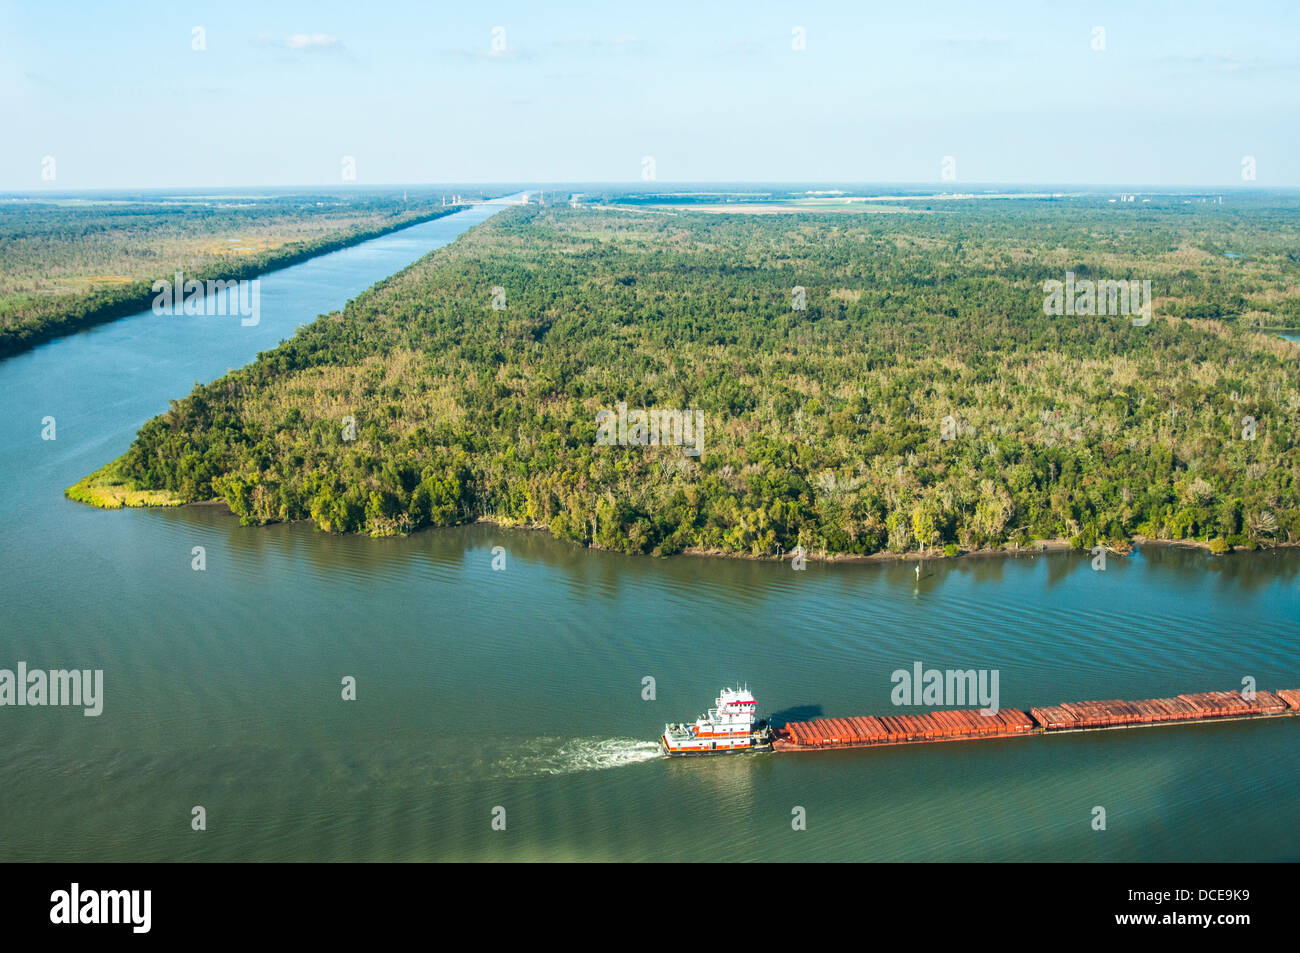 USA, Louisiana, Atchafalaya Basin, intersection of Intracoastal Waterway and Wax Lake Outlet, tugboat pushing barge of freight. Stock Photo